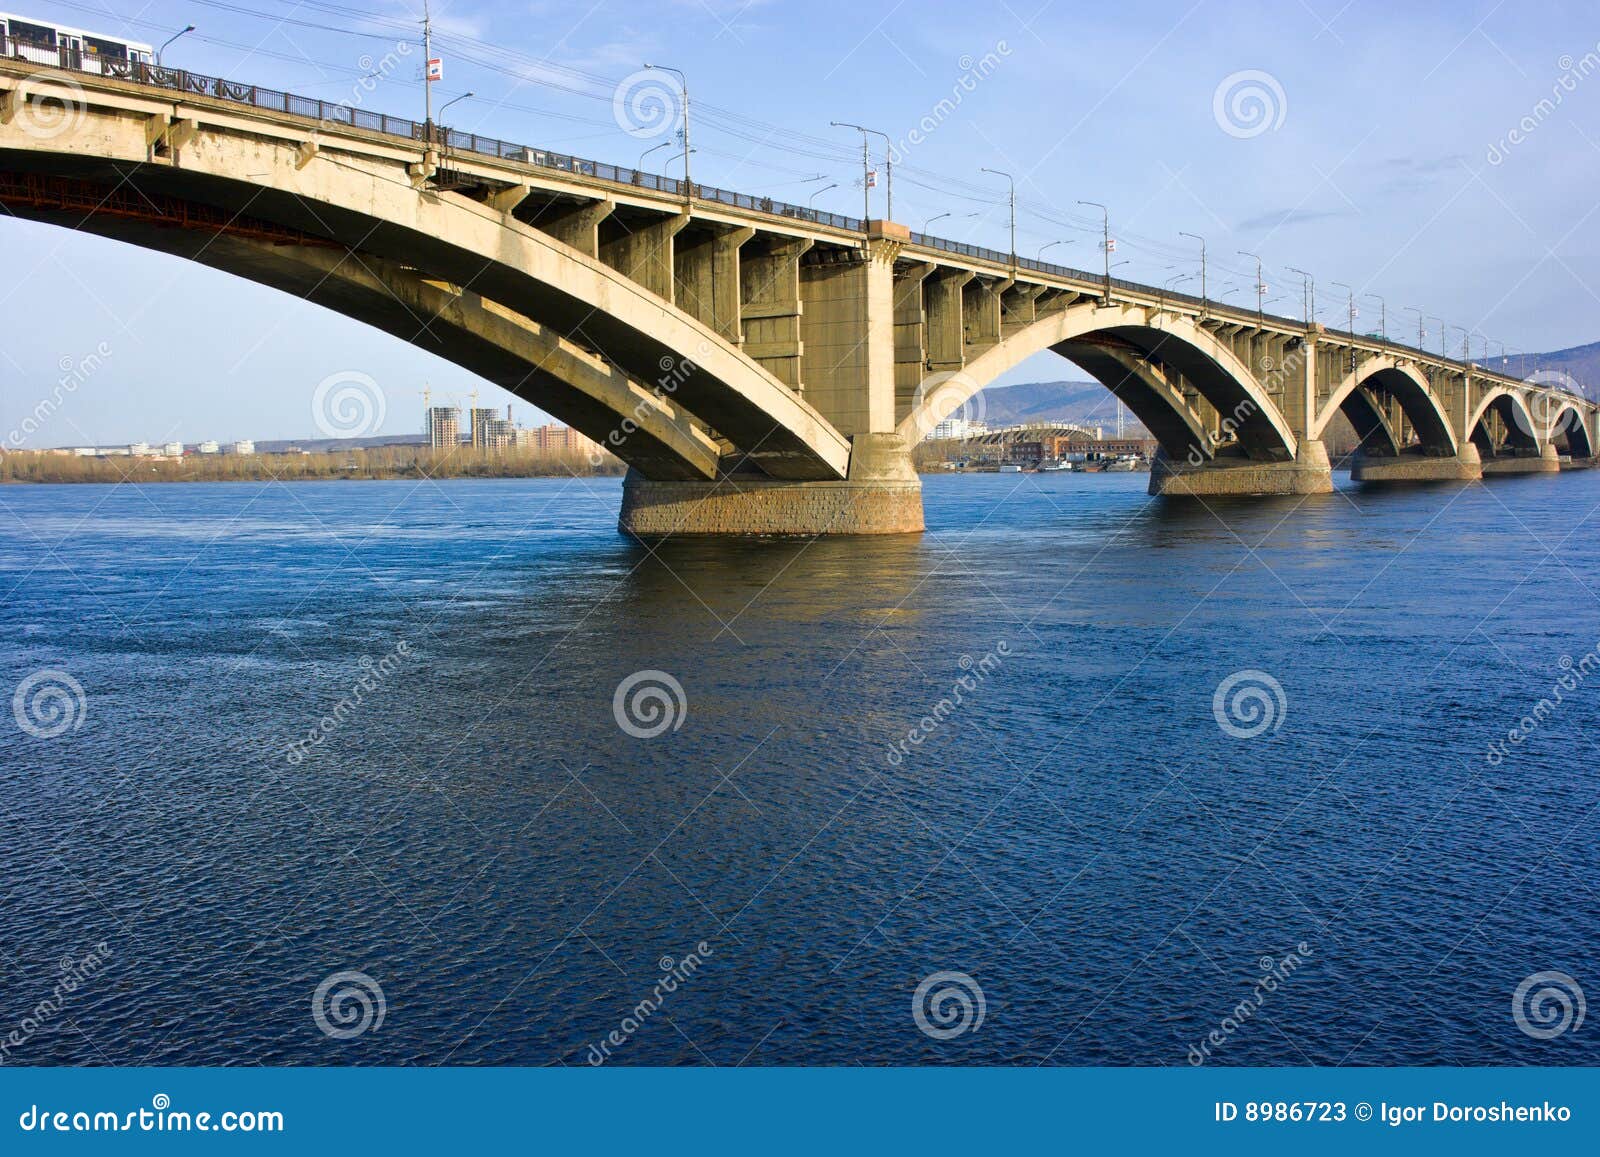 bridge in krasnoyarsk